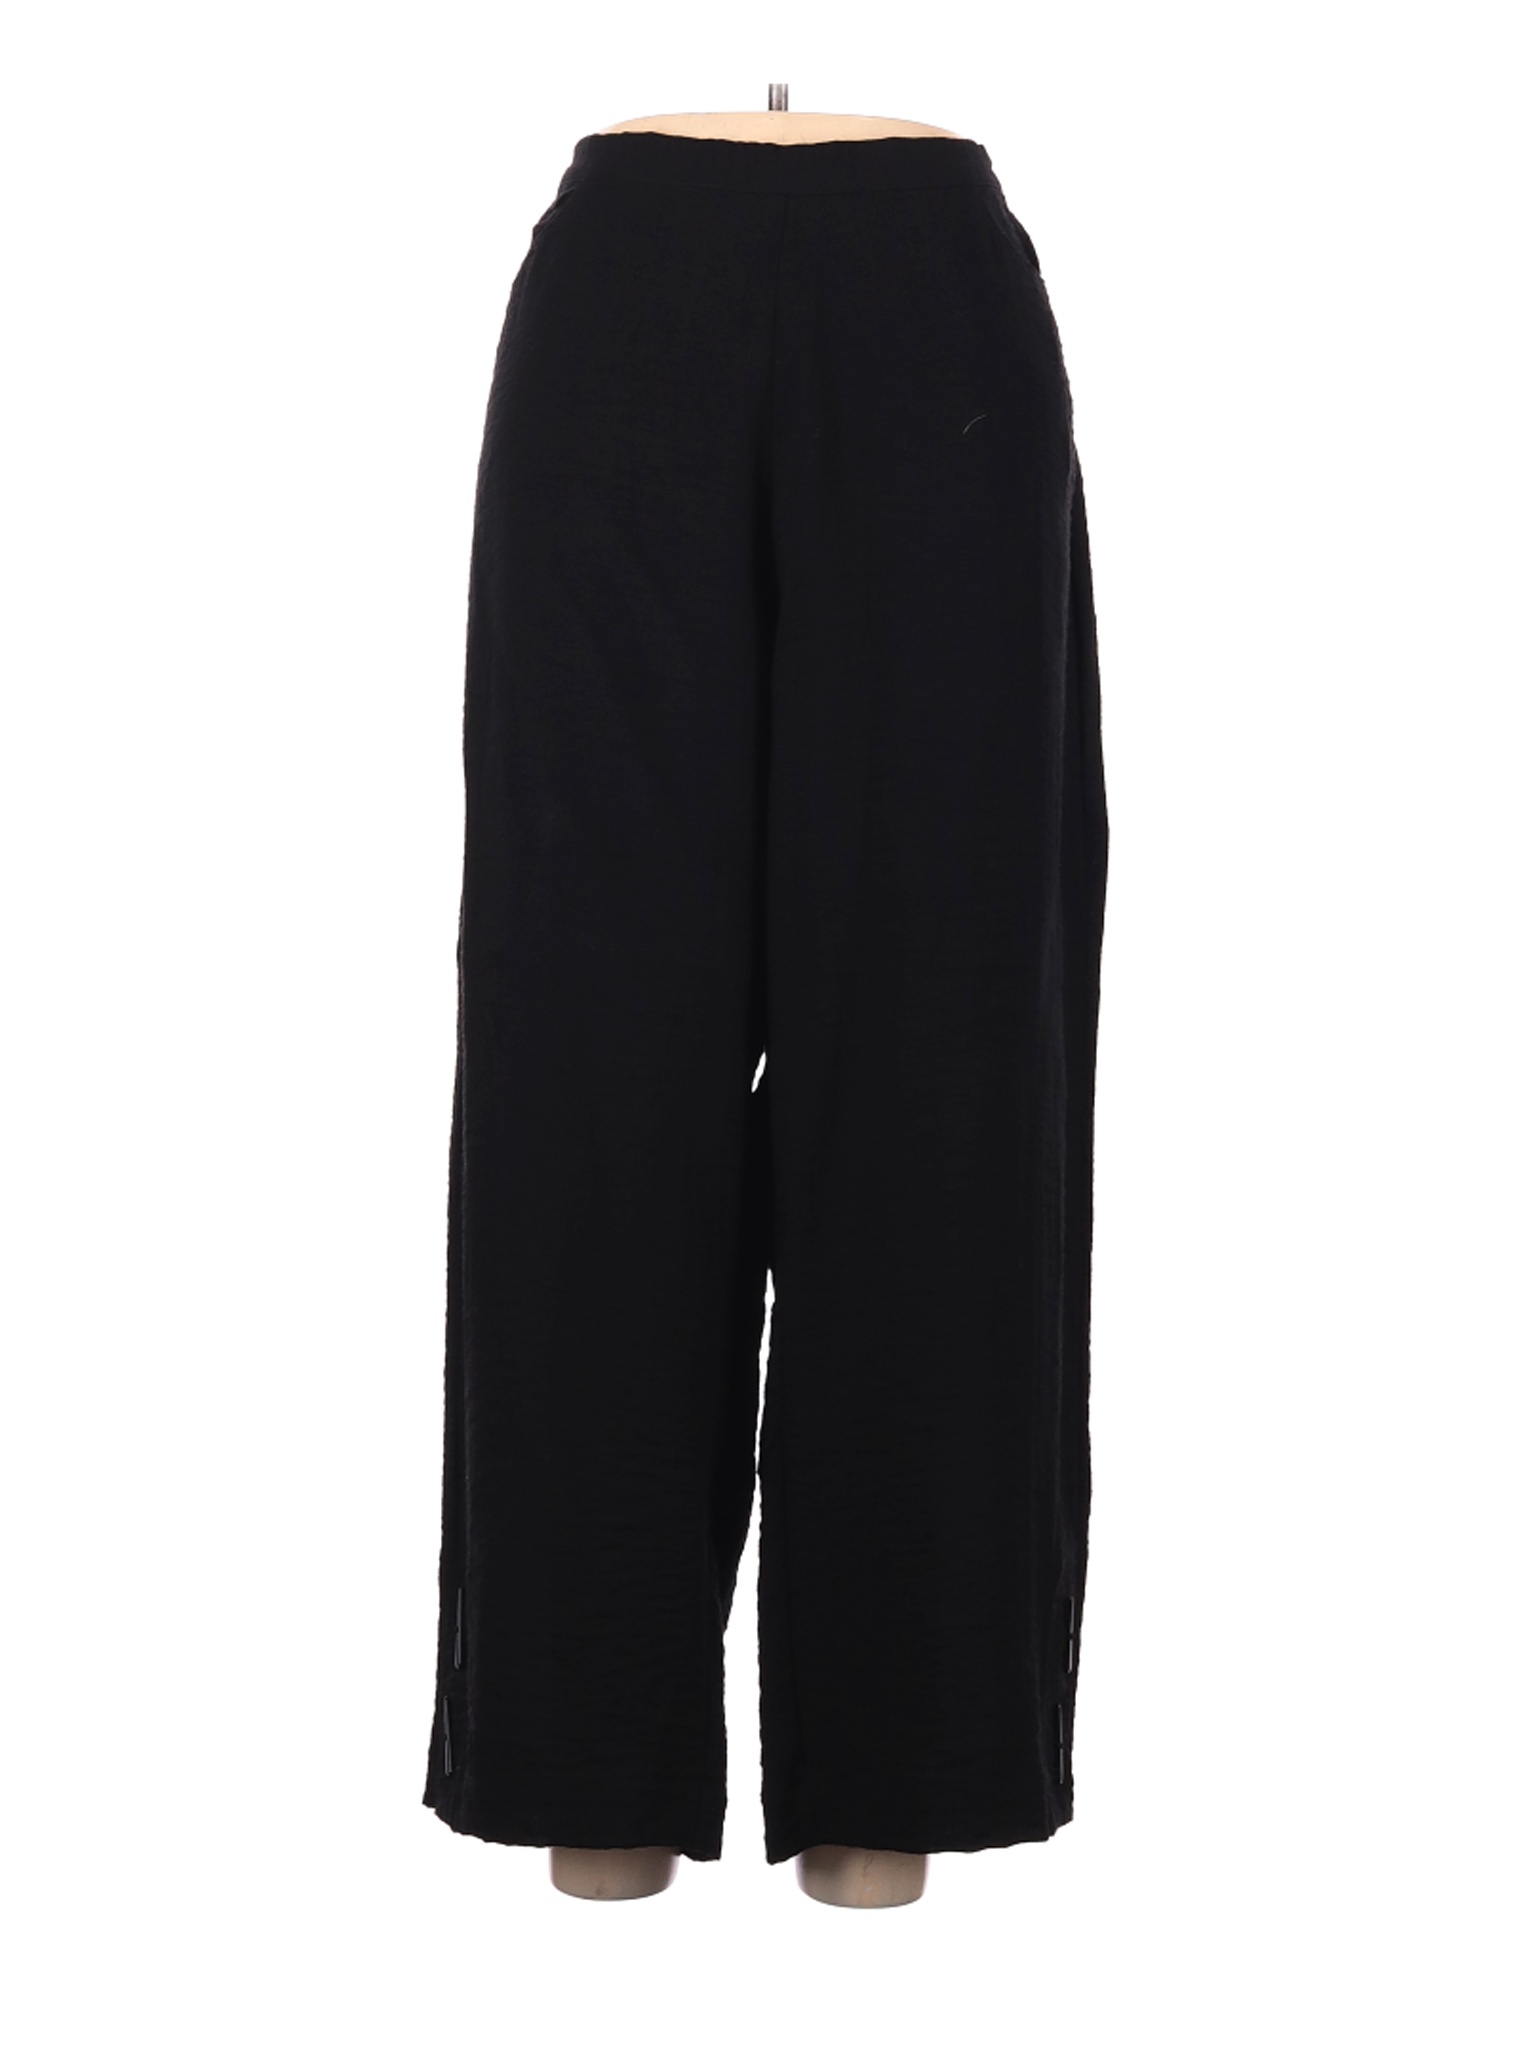 Habitat Women Black Casual Pants XL | eBay